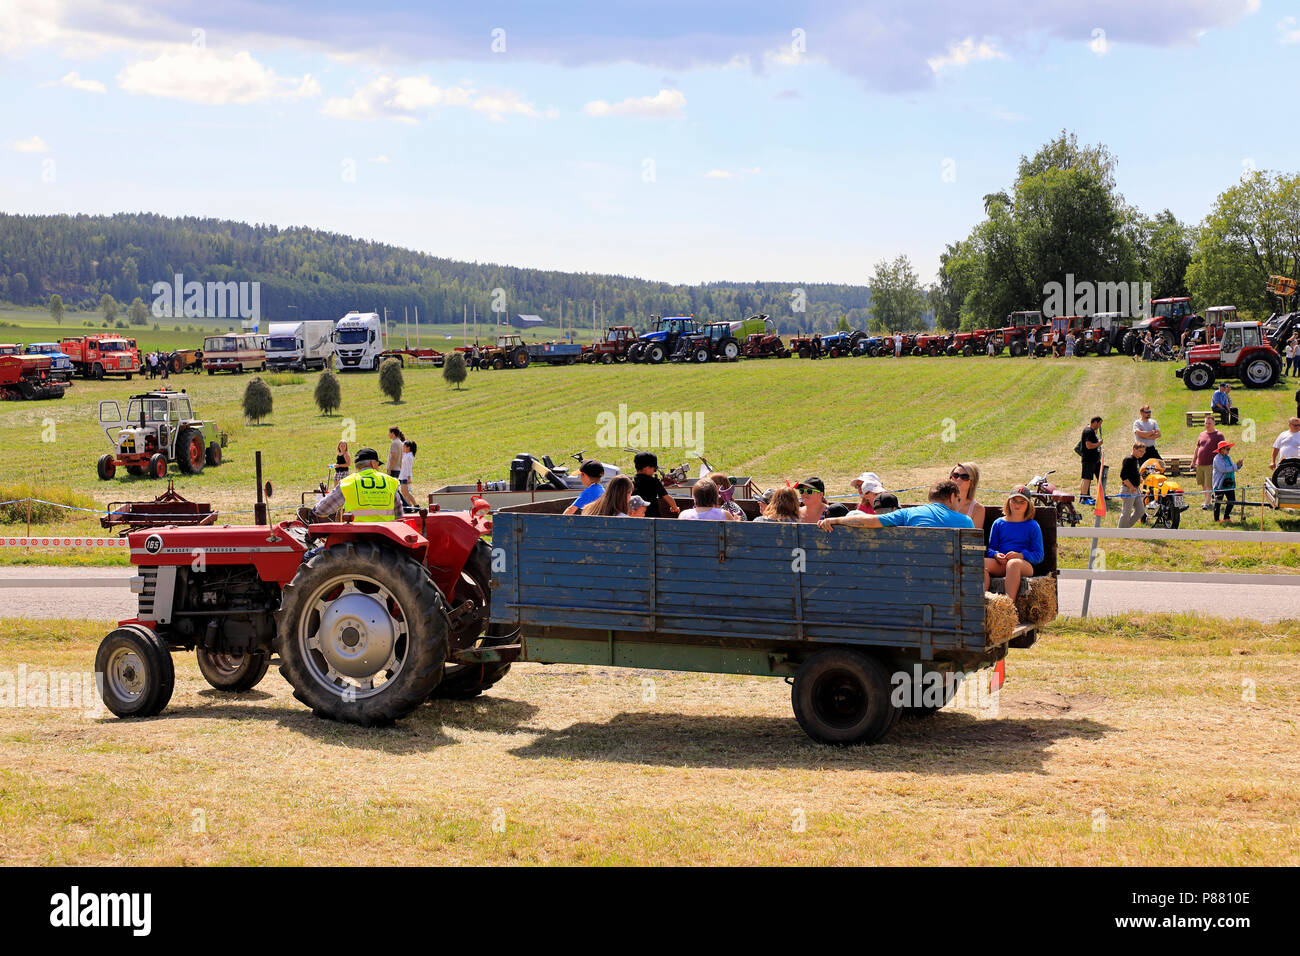 Visitors are enjoying a tractor and trailer ride on Kimito Traktorkavalkad, Tractor Cavalcade, a tractor show in Kimito, Finland - July 7, 2018. Stock Photo